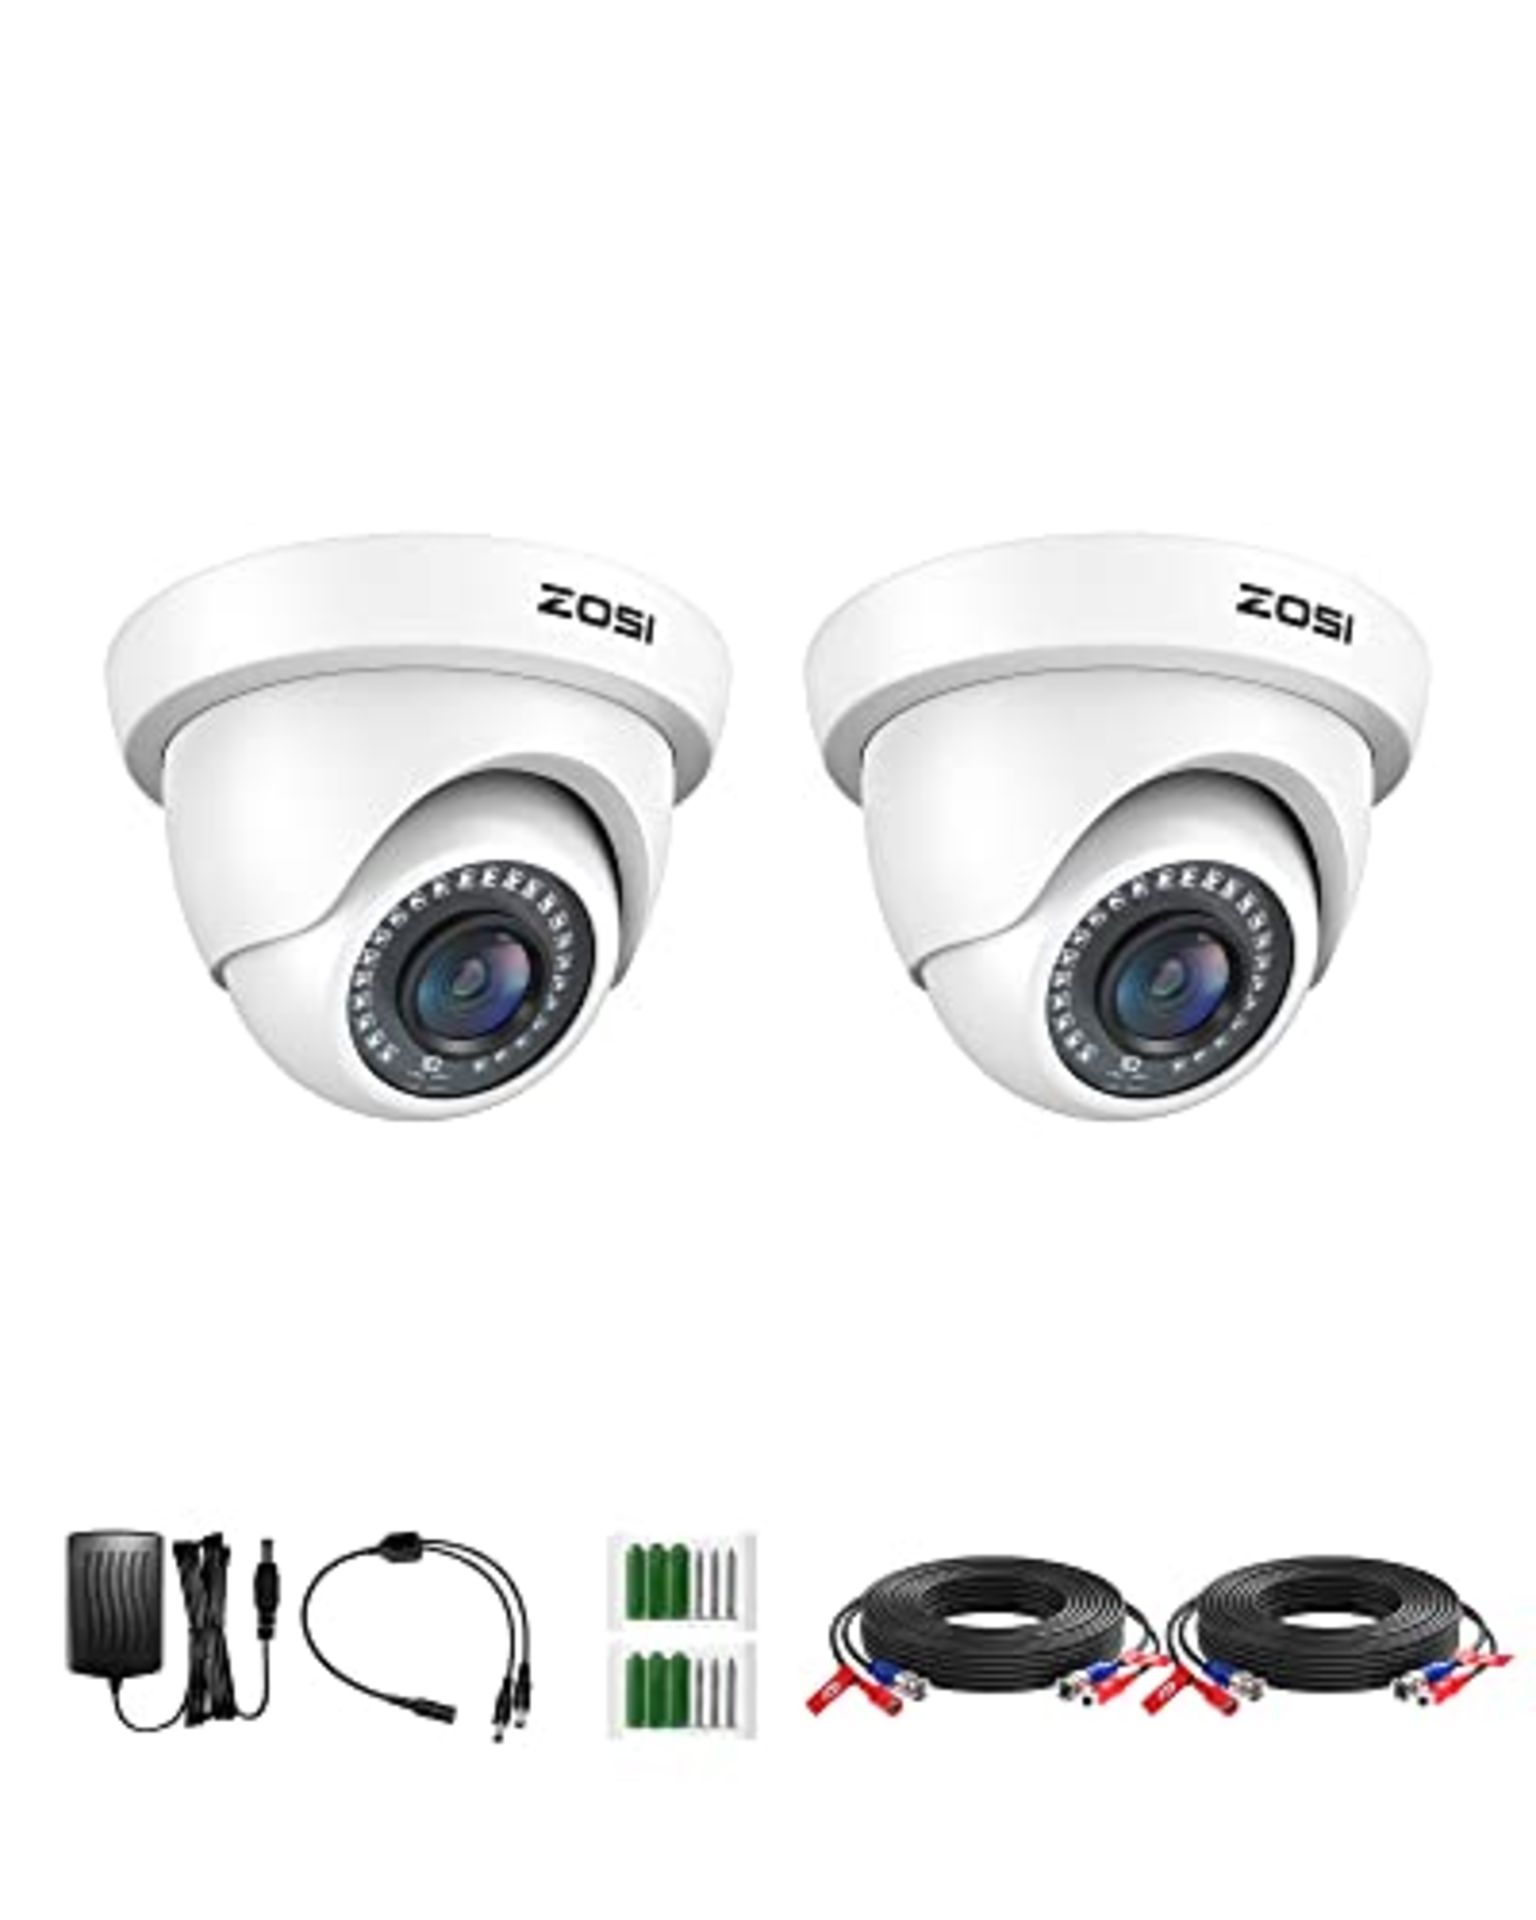 ZOSI 2 Pack 1080P HD TVI Security Camera Outdoor 80ft Night Vision Weatherproof, Motio